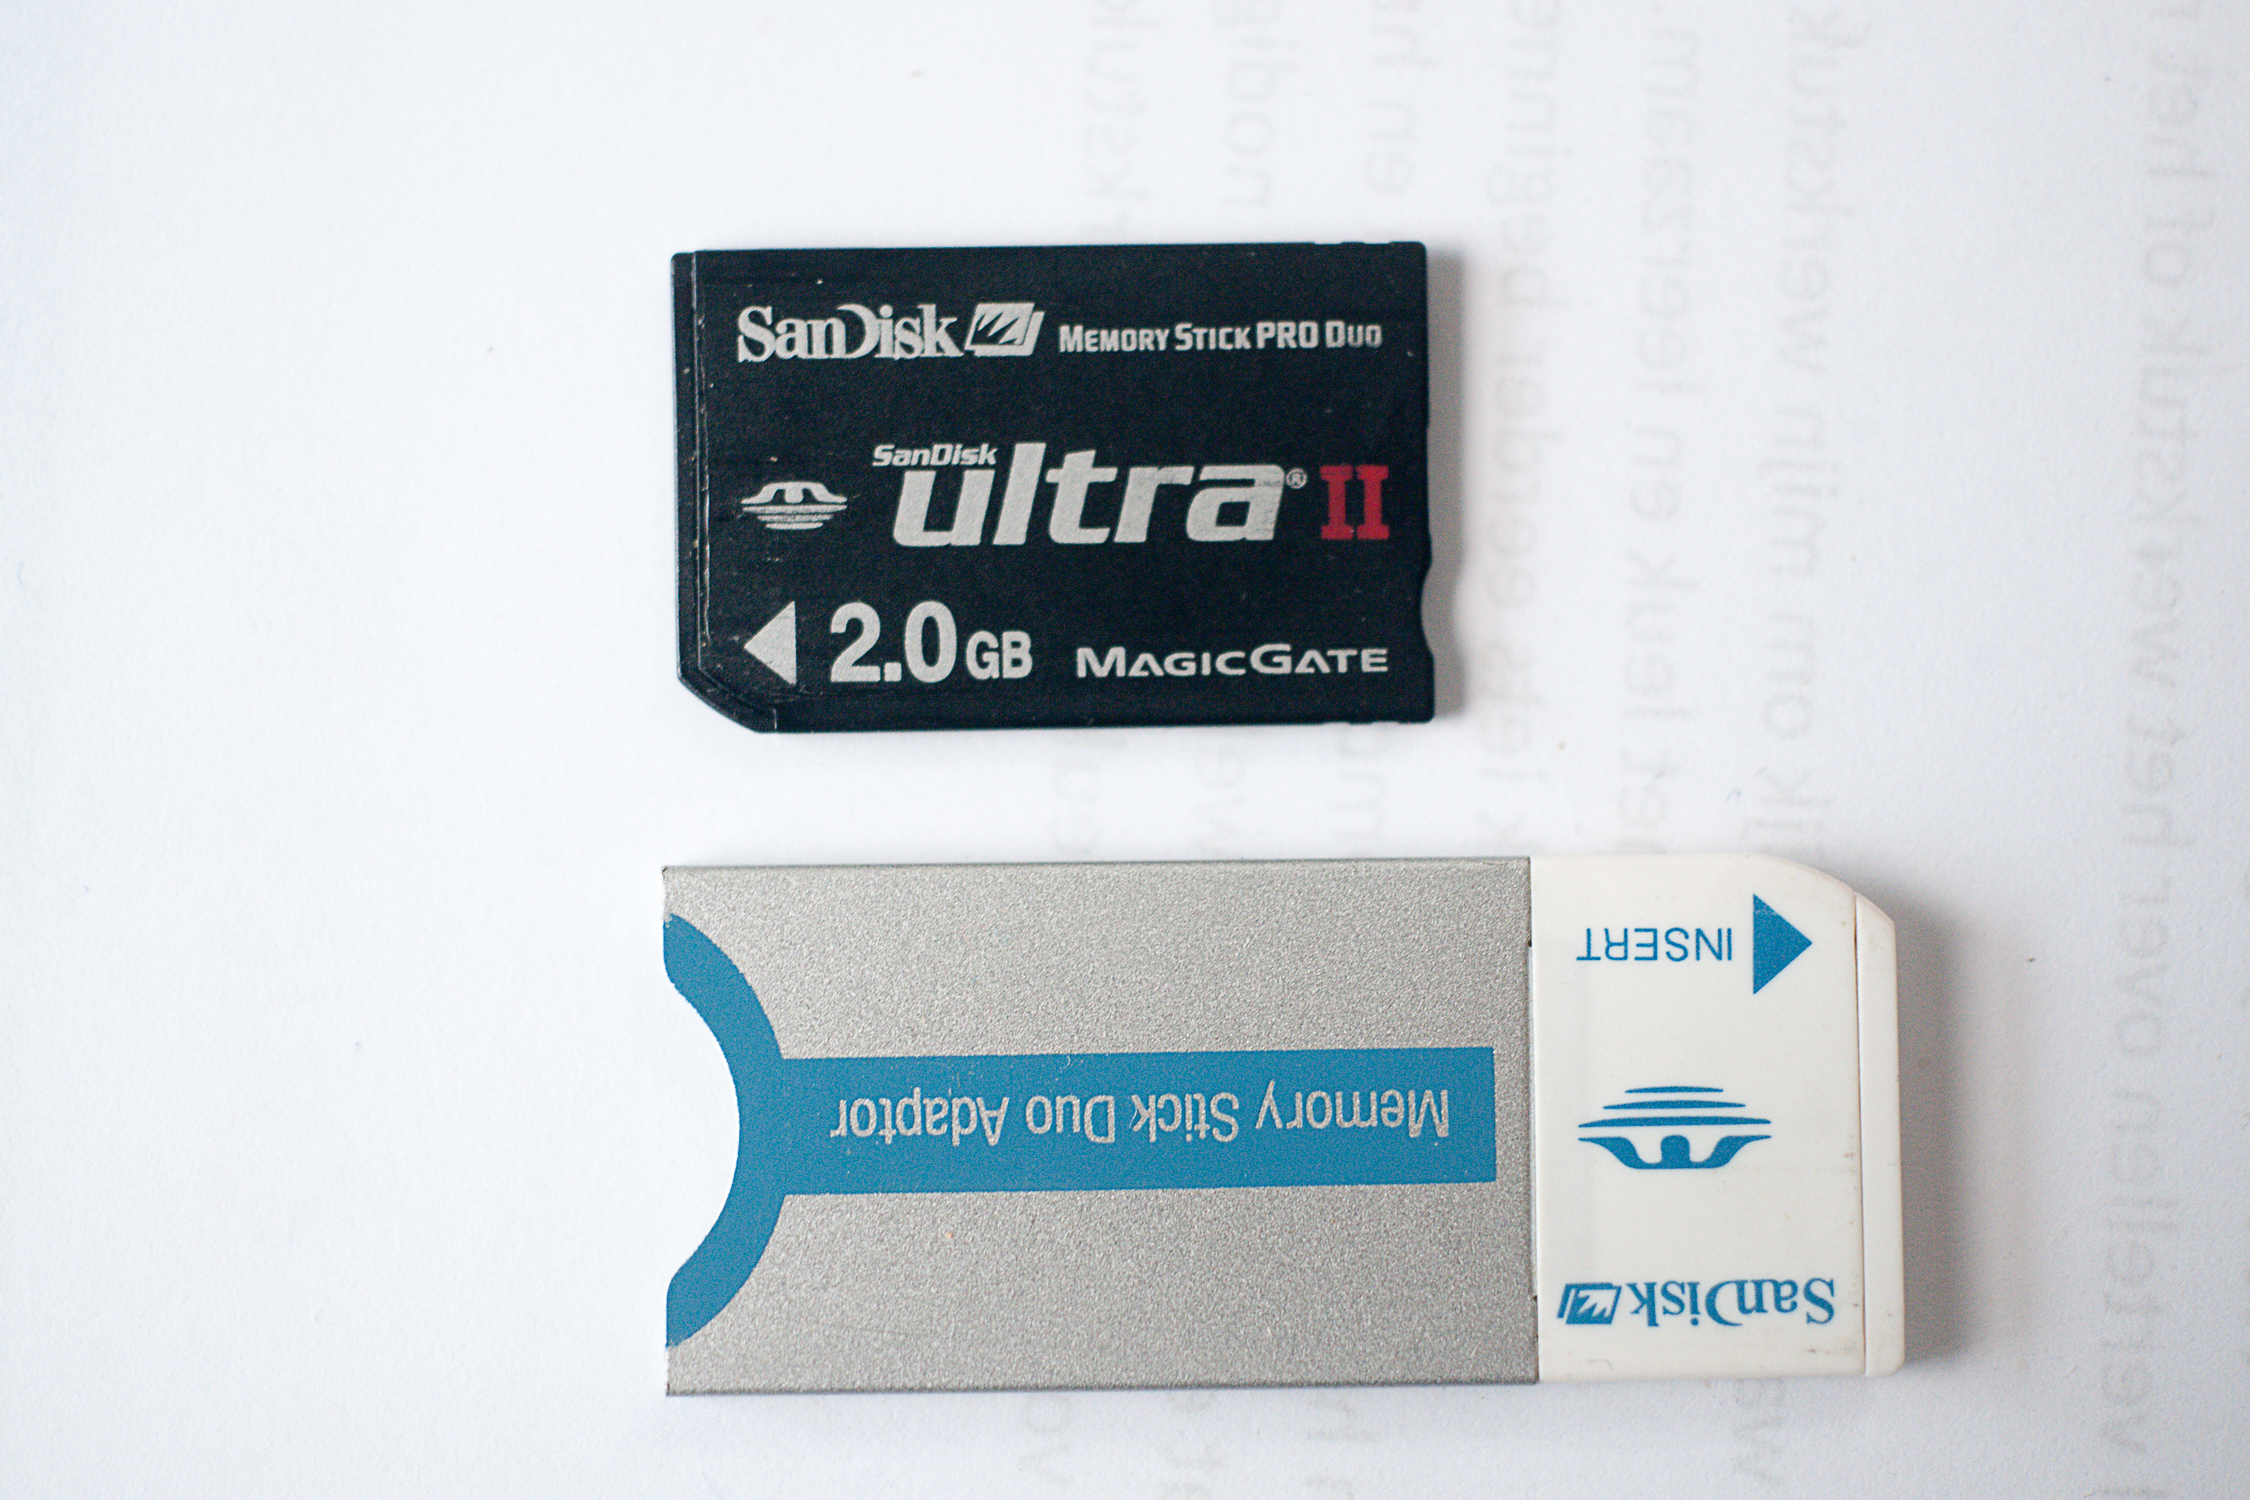 SanDisk 128MB Memory Stick Pro Duo (MS Pro Duo) Flash Media Model